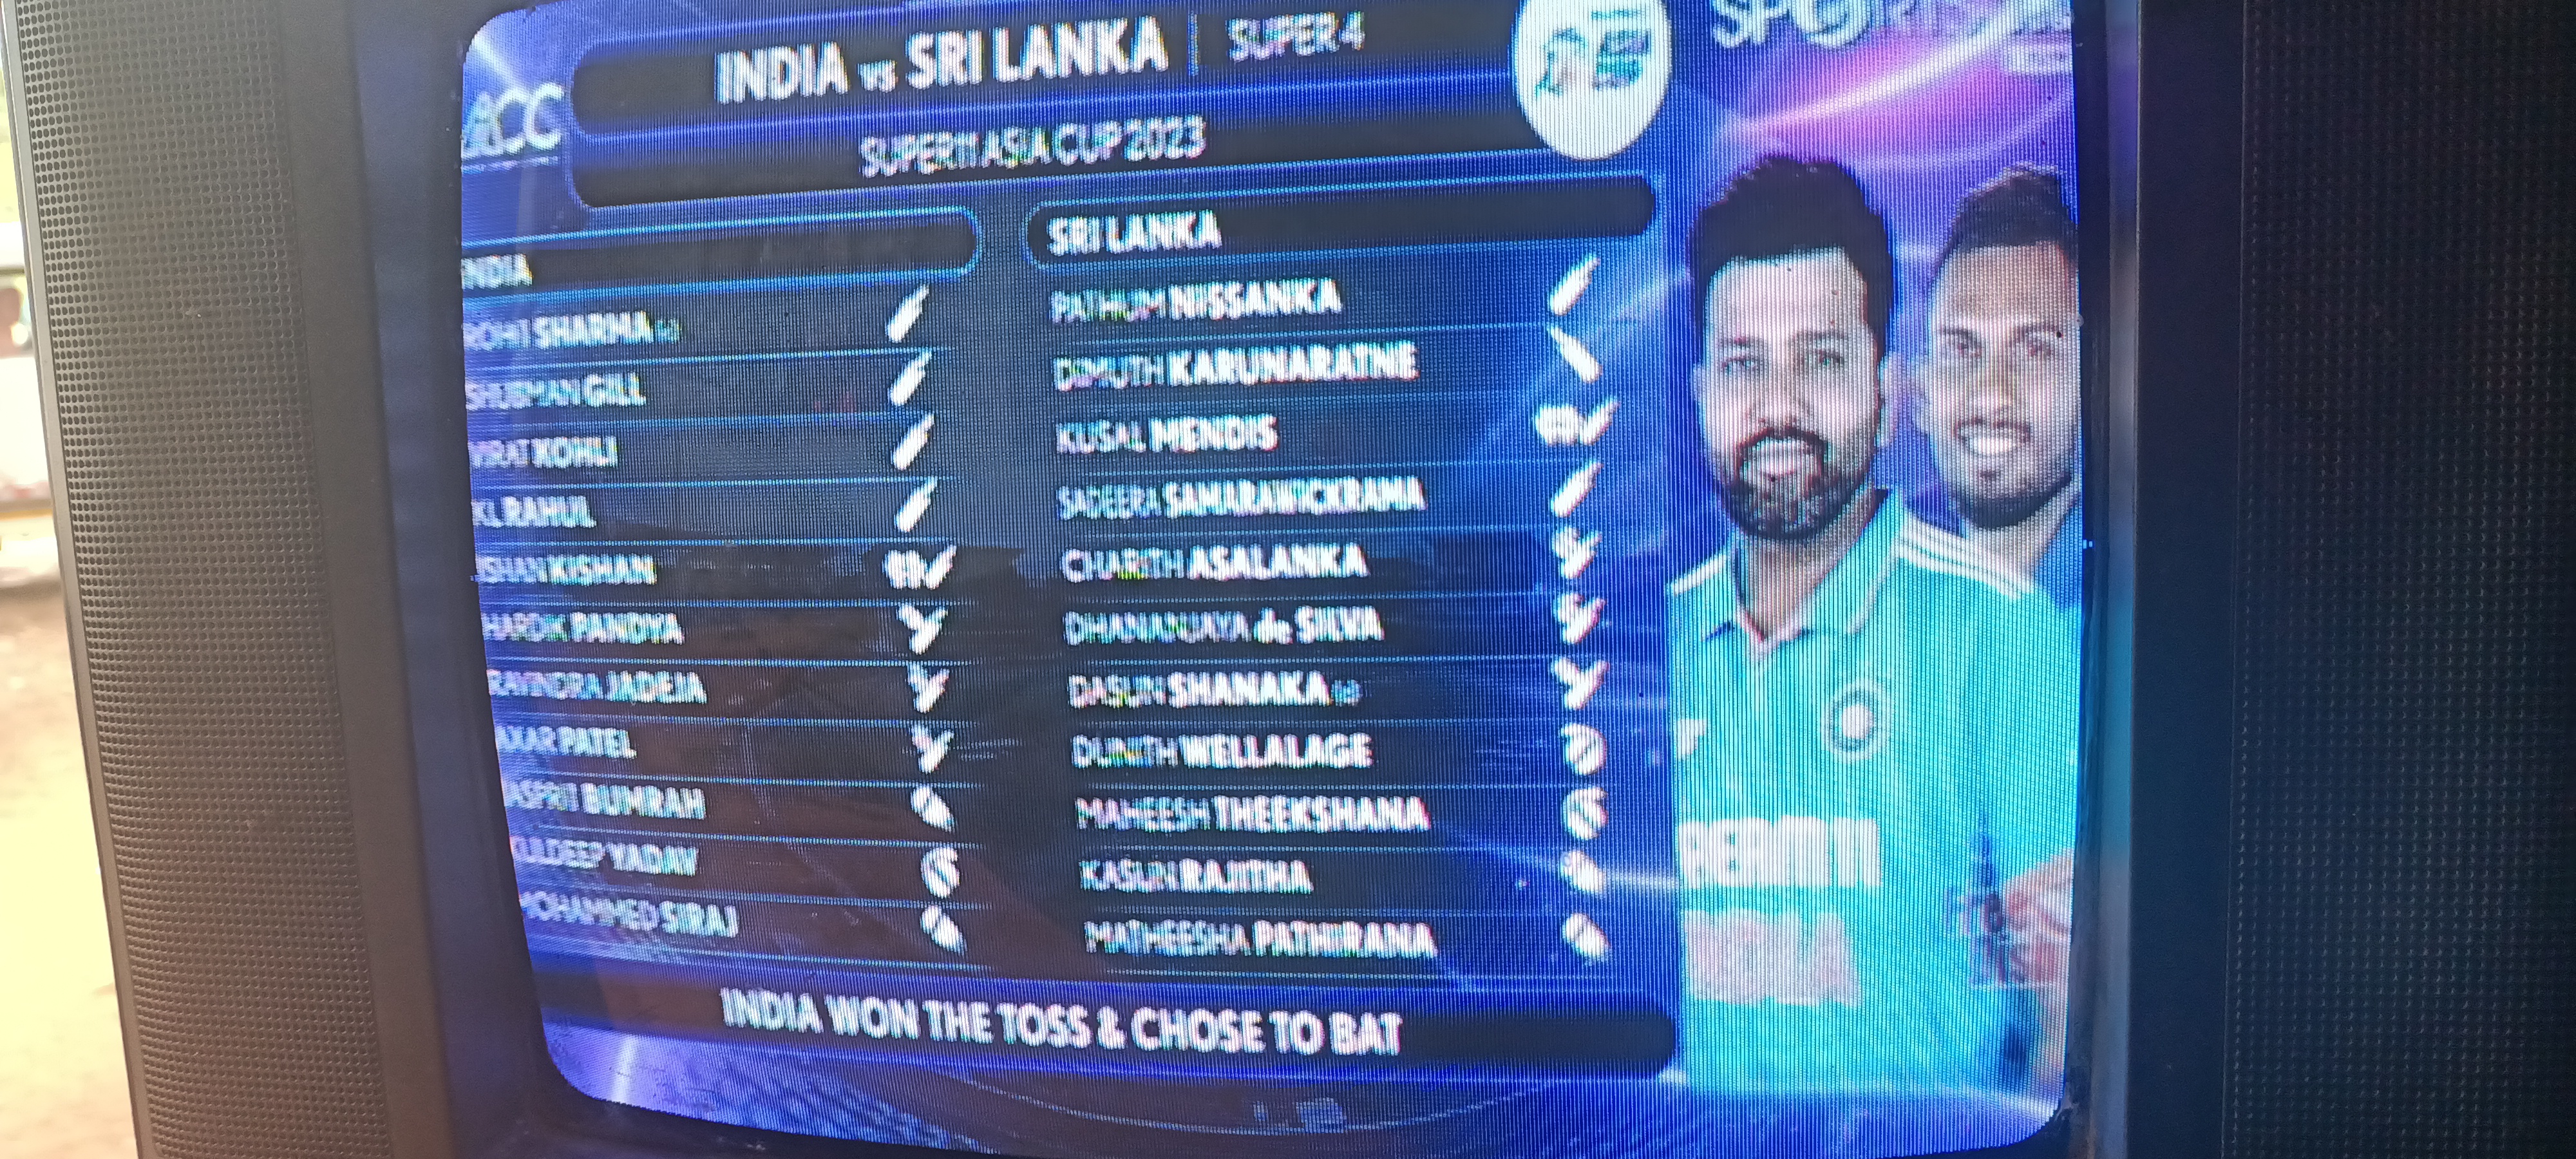 Pakistan vs shrilanka